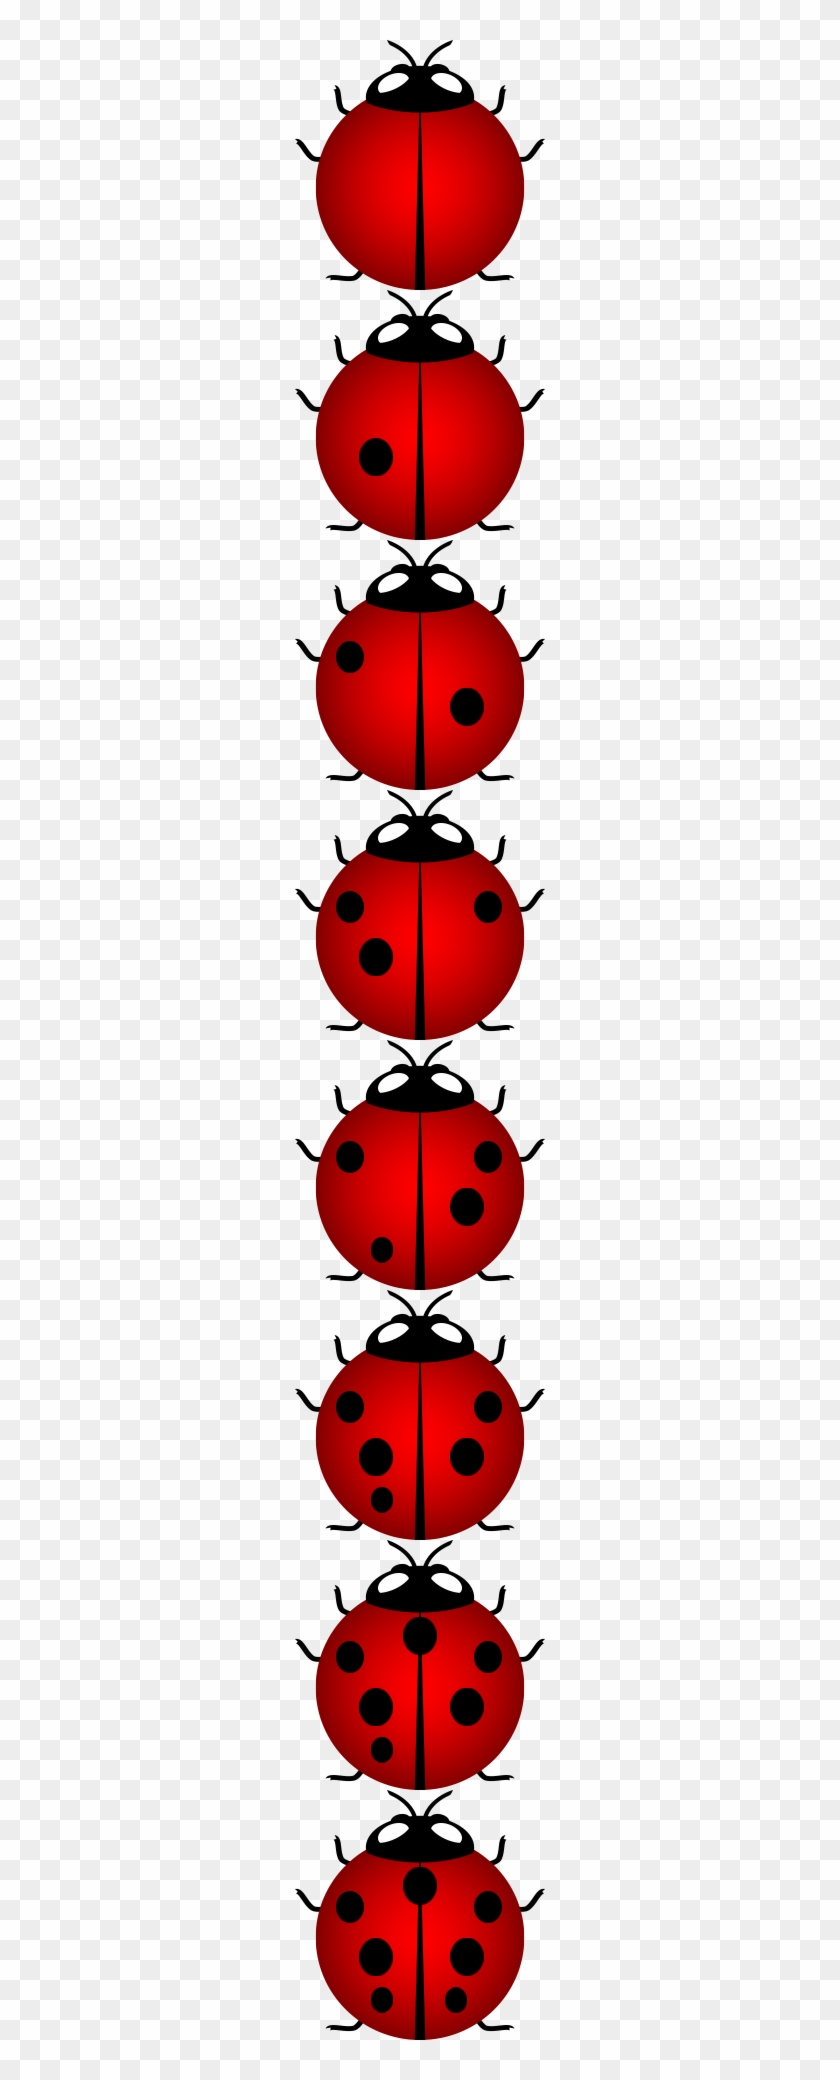 Match Clipart Ladybug Number - Lady Bug Sprite Png #1247637